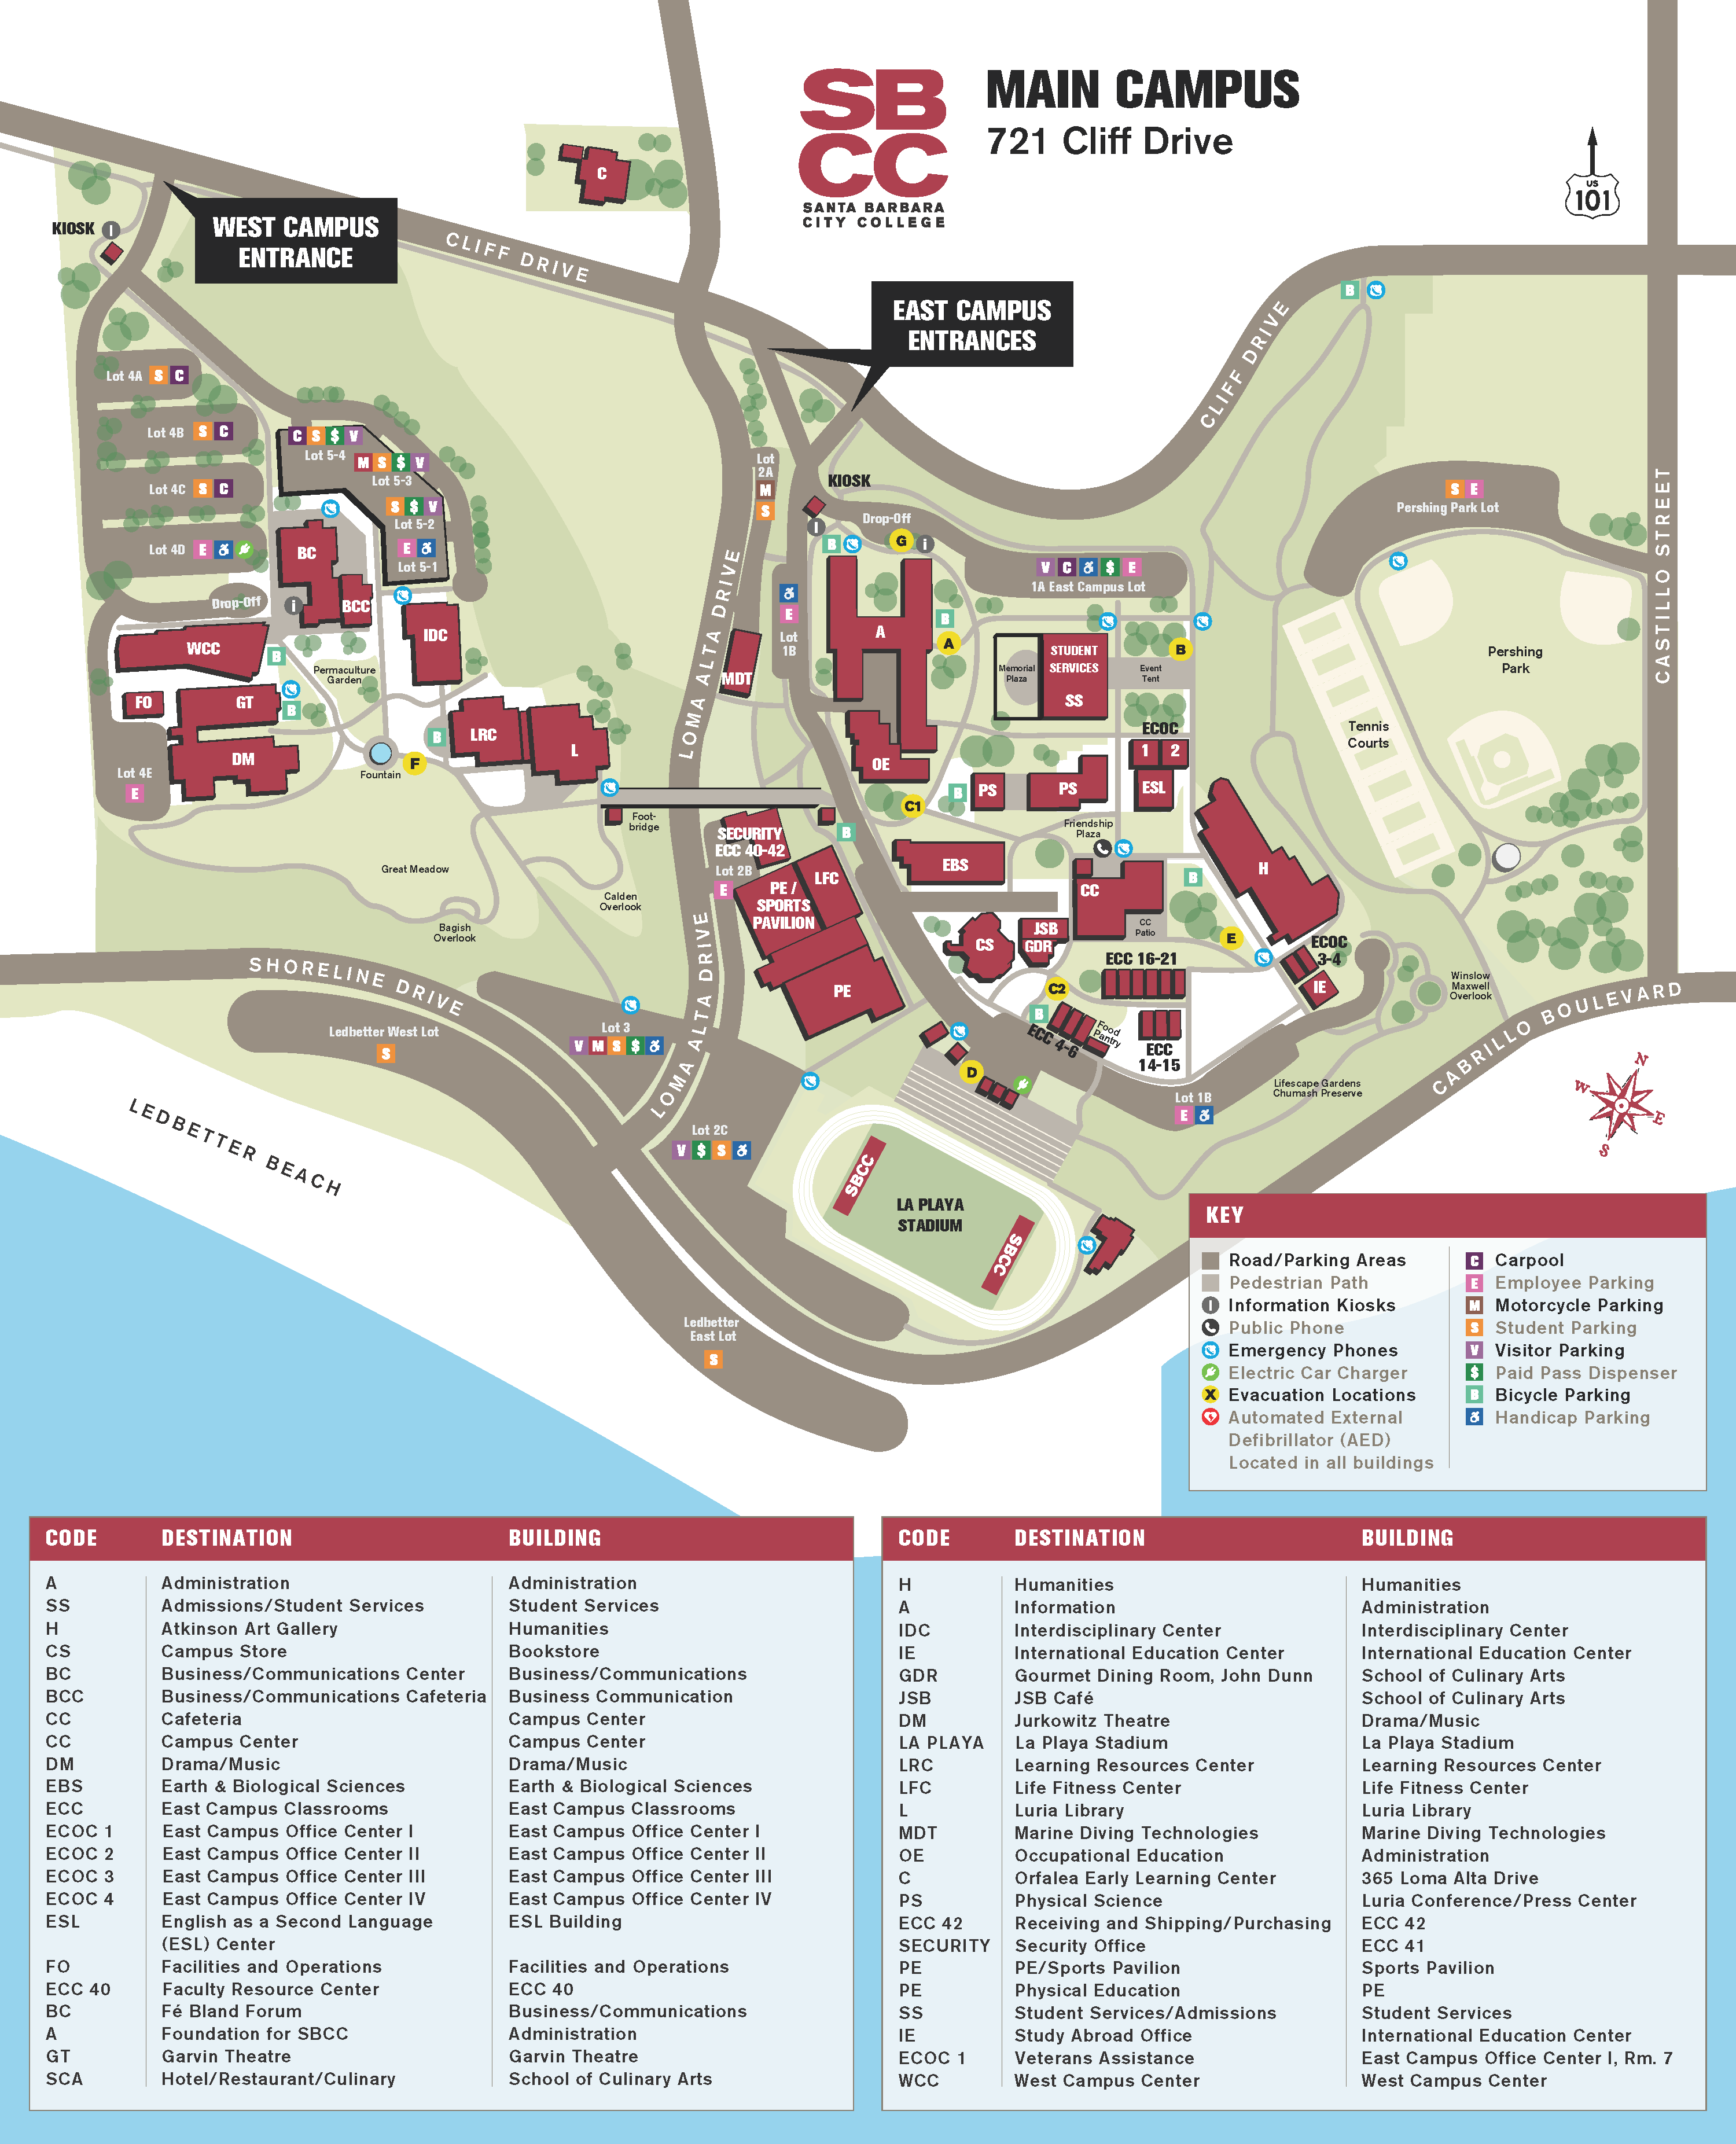 SBCC Campus Map